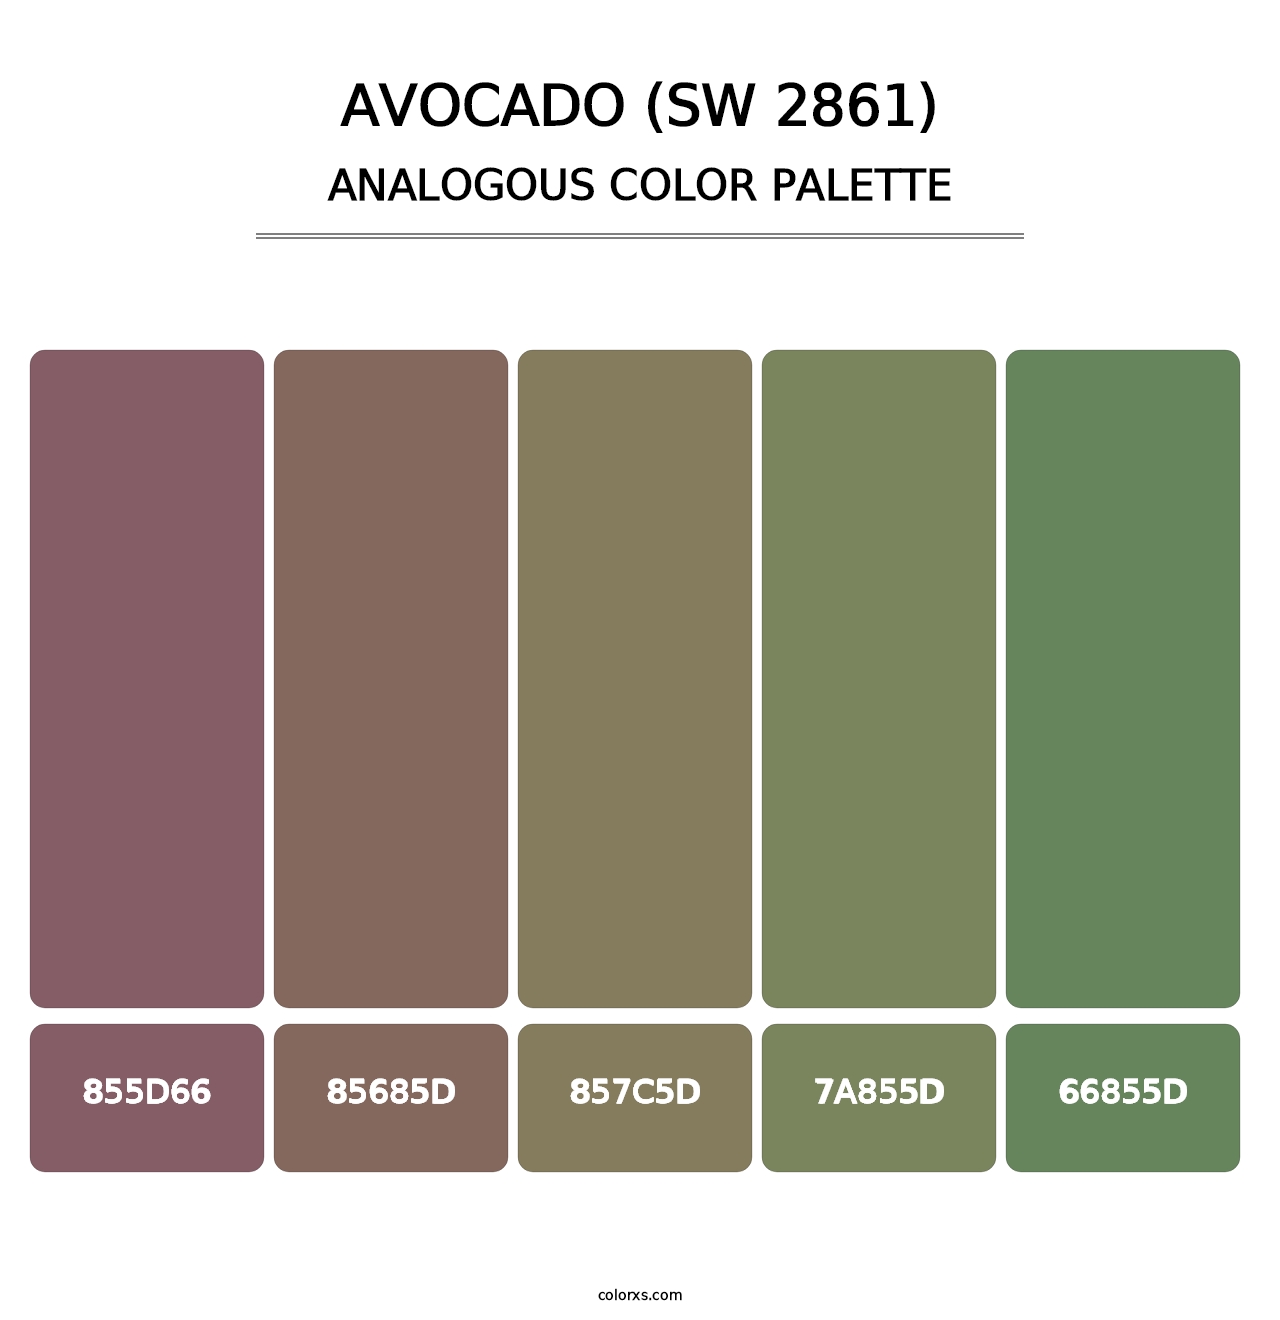 Avocado (SW 2861) - Analogous Color Palette